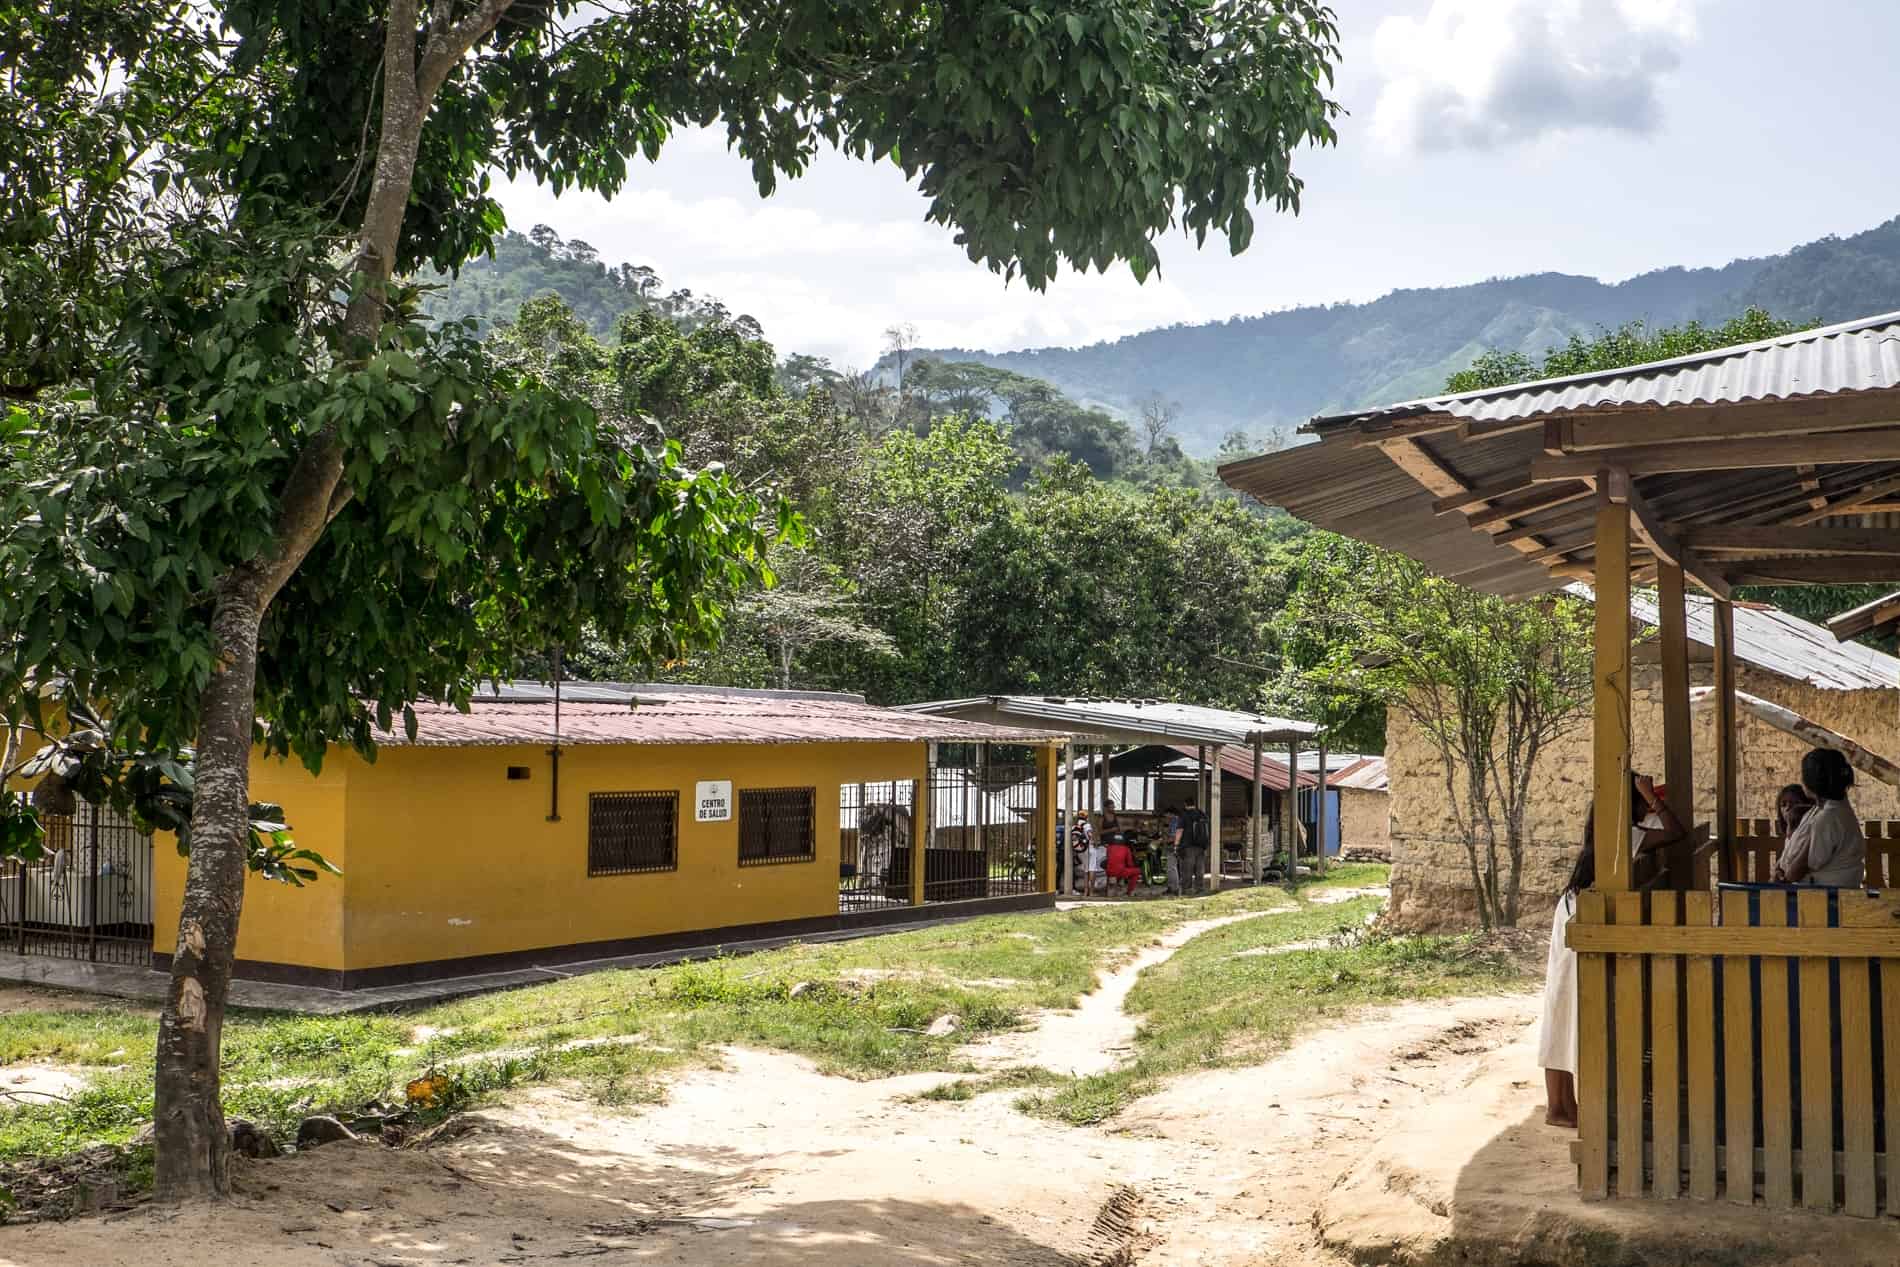 Wiwa community buildings in Sierra Nevada Colombia.